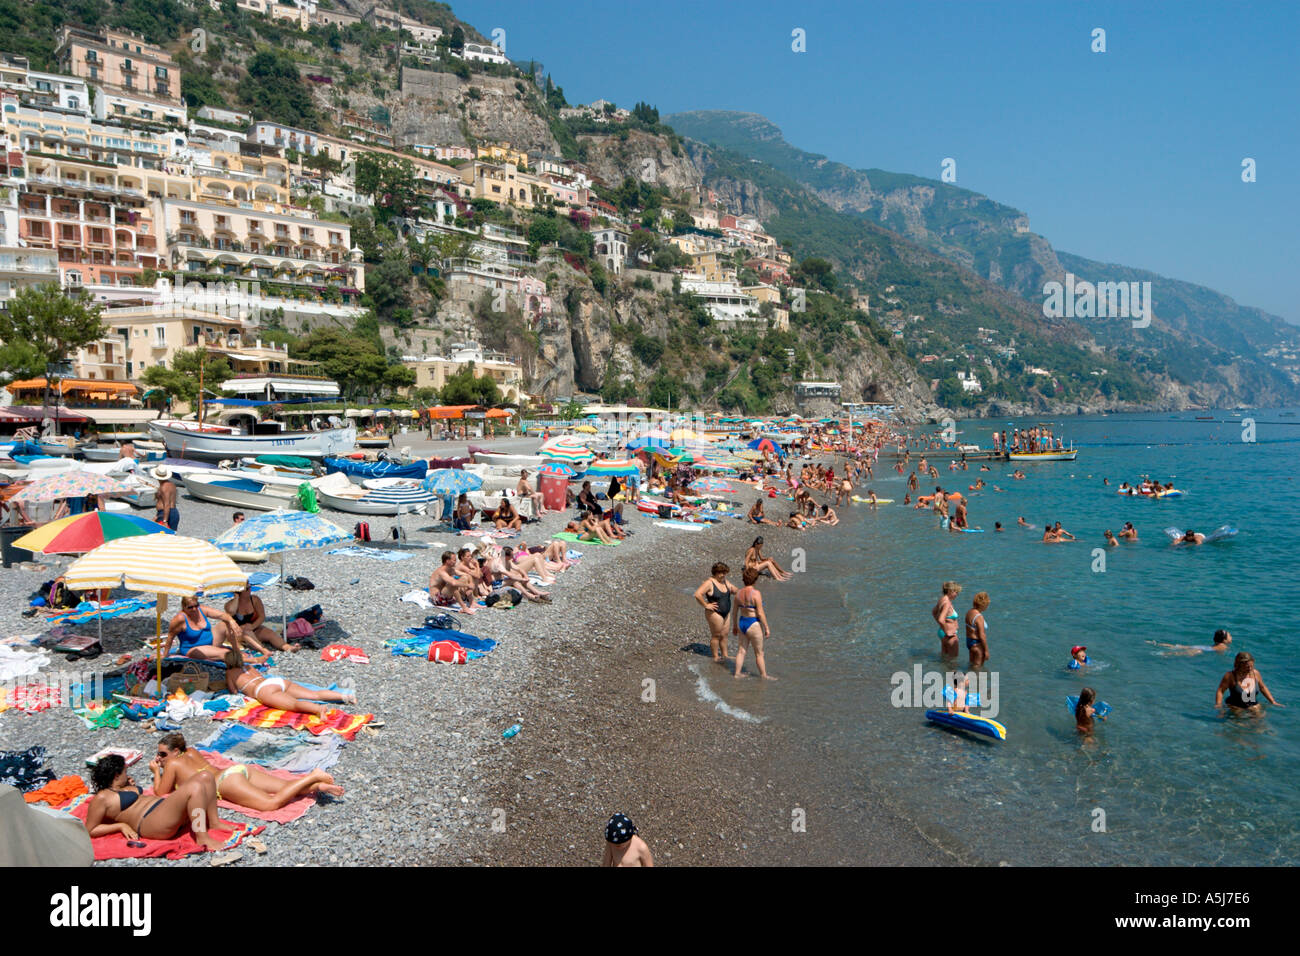 Playa en Positano, Amalfi Costa (Costiera Amalfitana), Riviera Napolitana, Italia Foto de stock